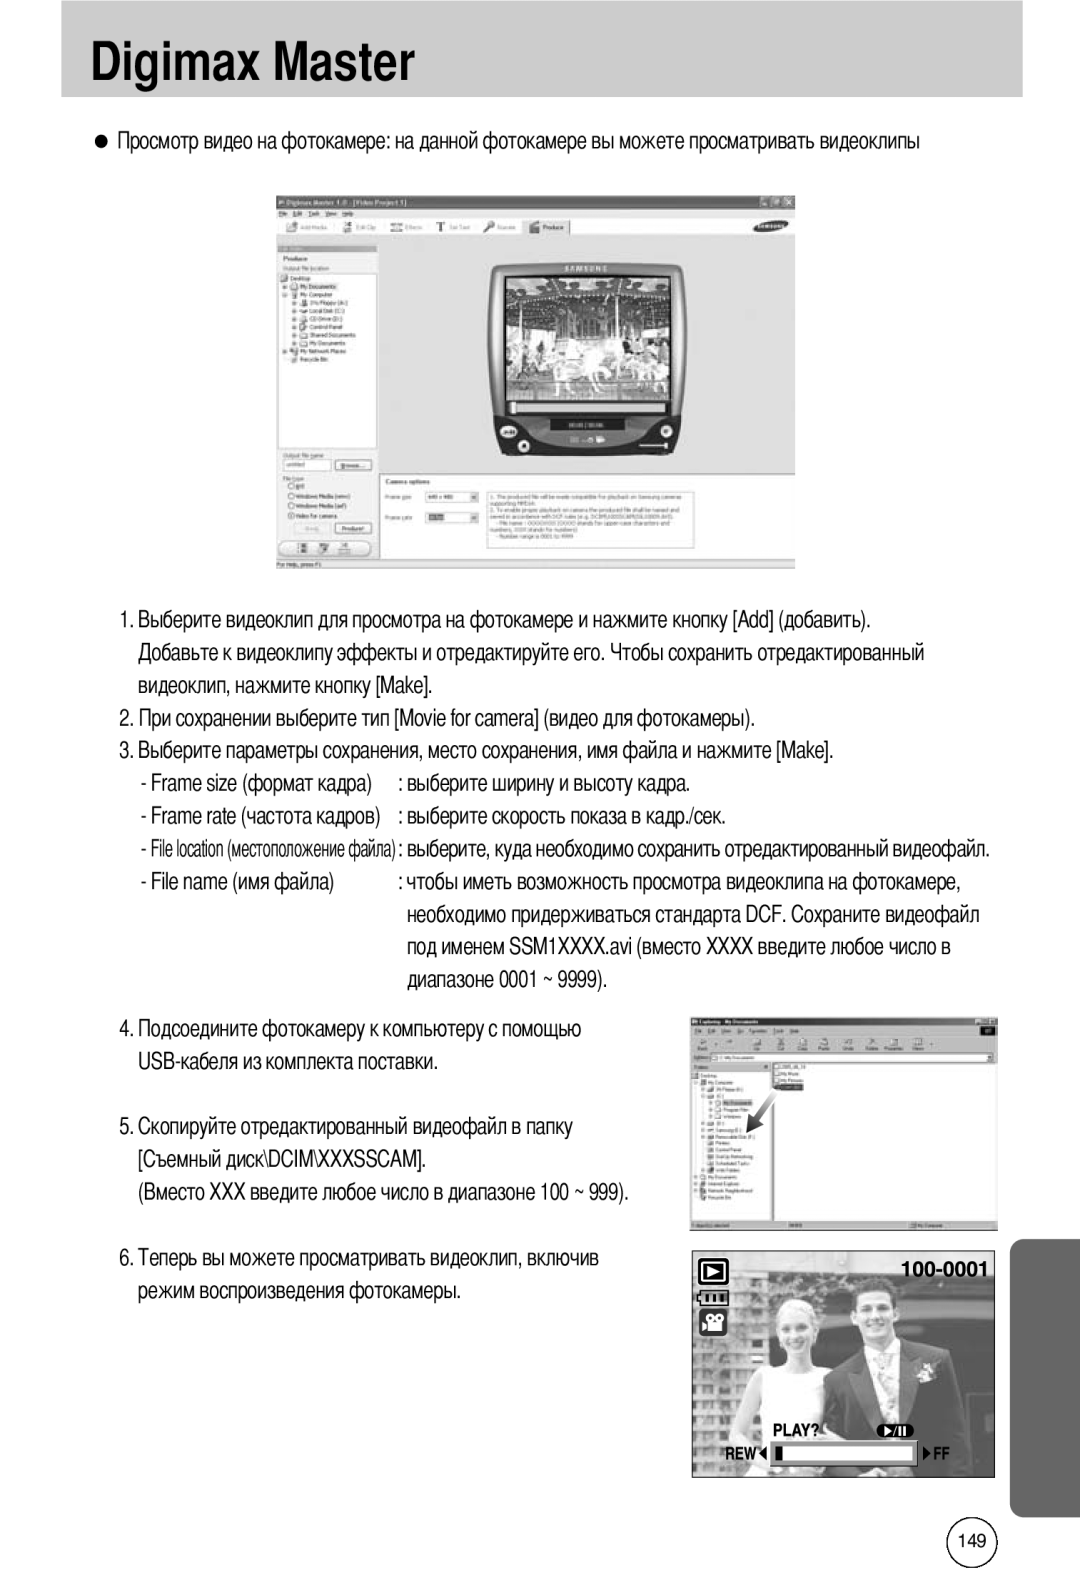 Samsung EC-I50ZZBBA/GB manual видеоклип, нажмите кнопку Make, необходимо придерживаться стандарта DCF, диапазоне 0001 ~ 